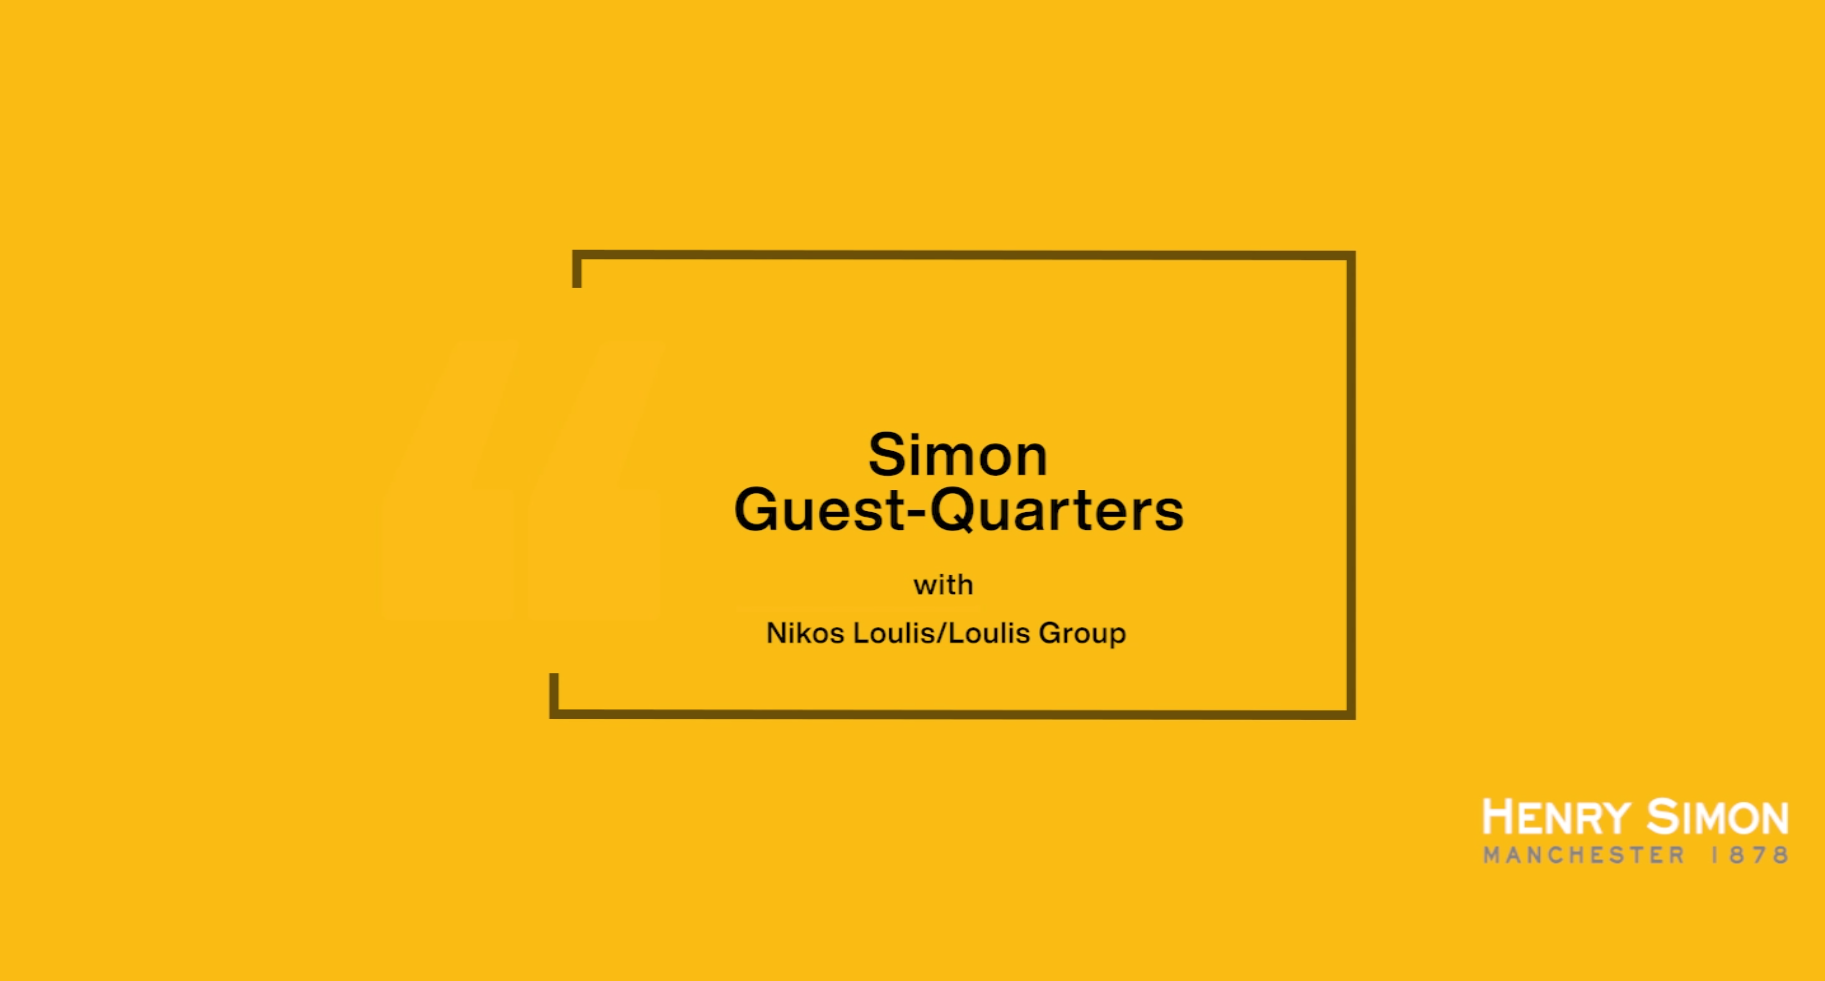 Simon Guest-Quarters with Nikos Loulis/Loulis Group